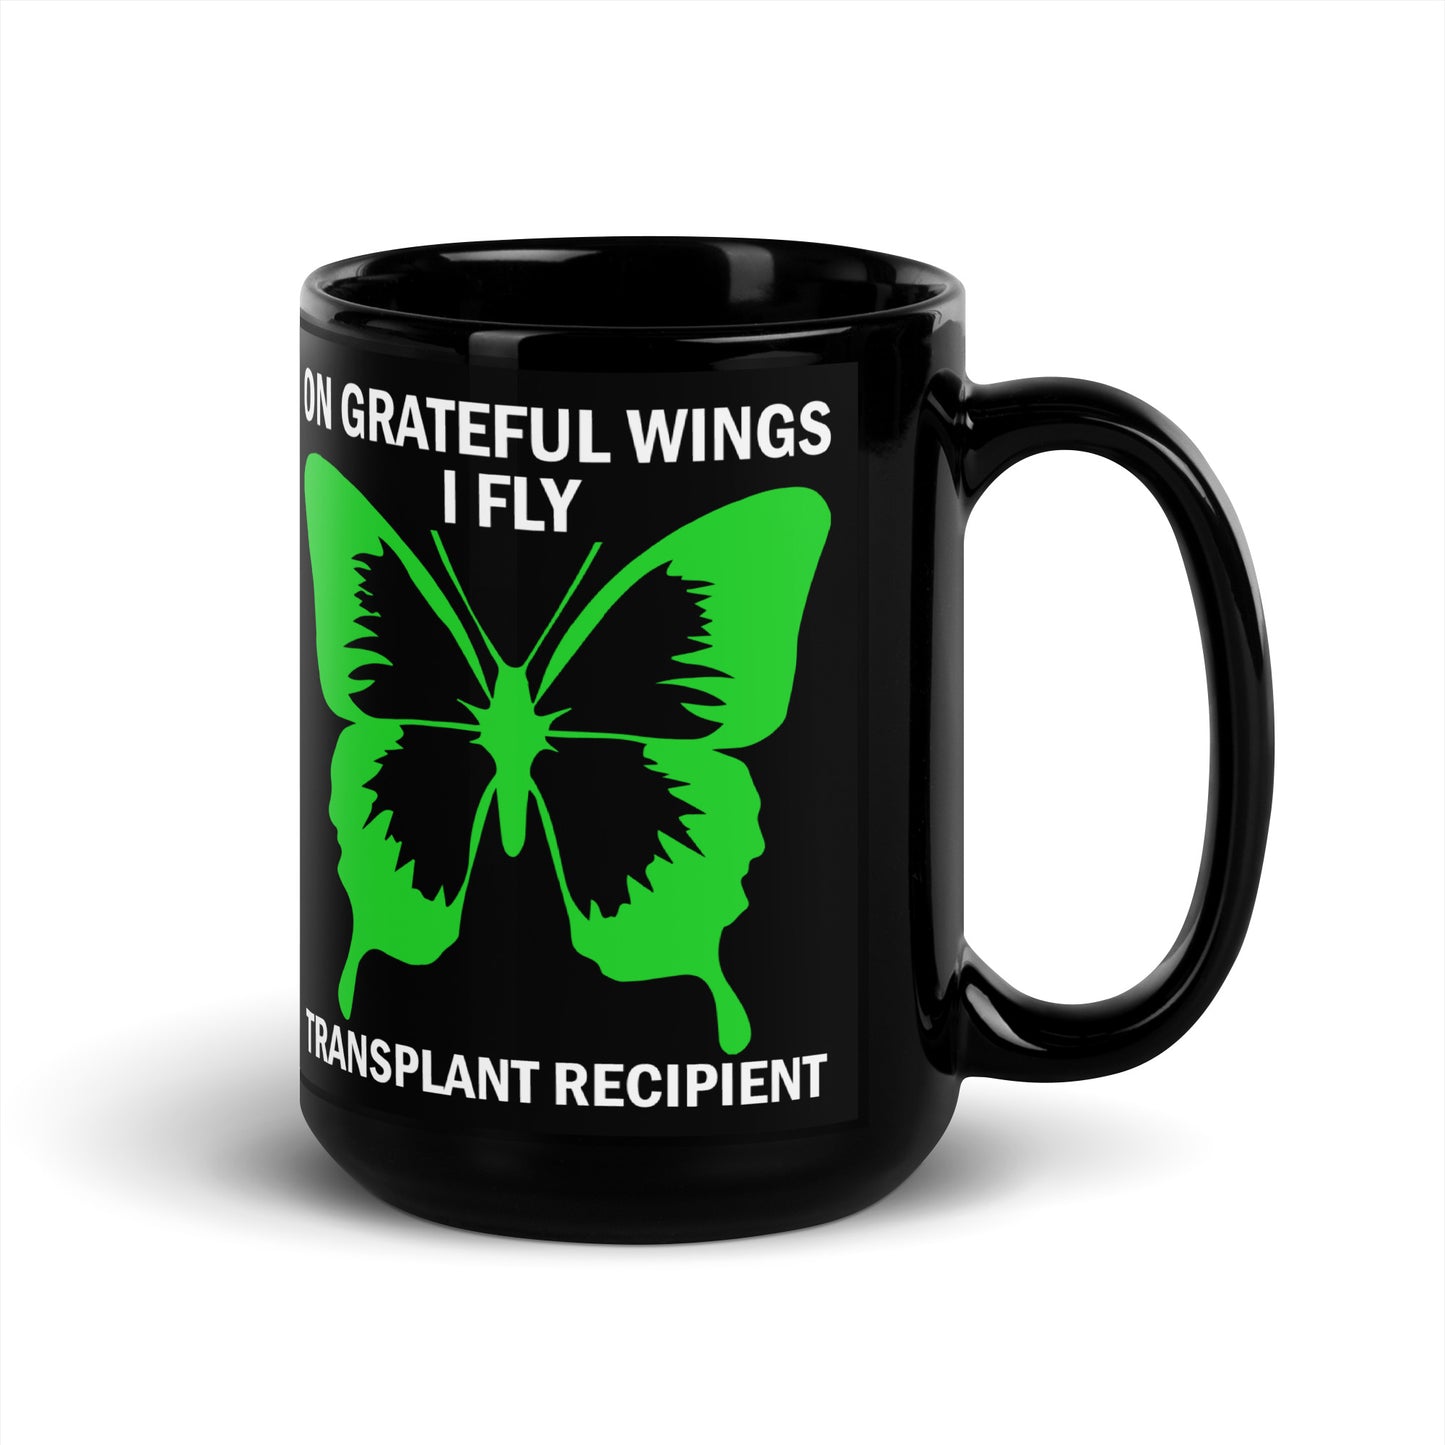 On Grateful Wings I Fly Kidney Recipient Ceramic Coffee Mug